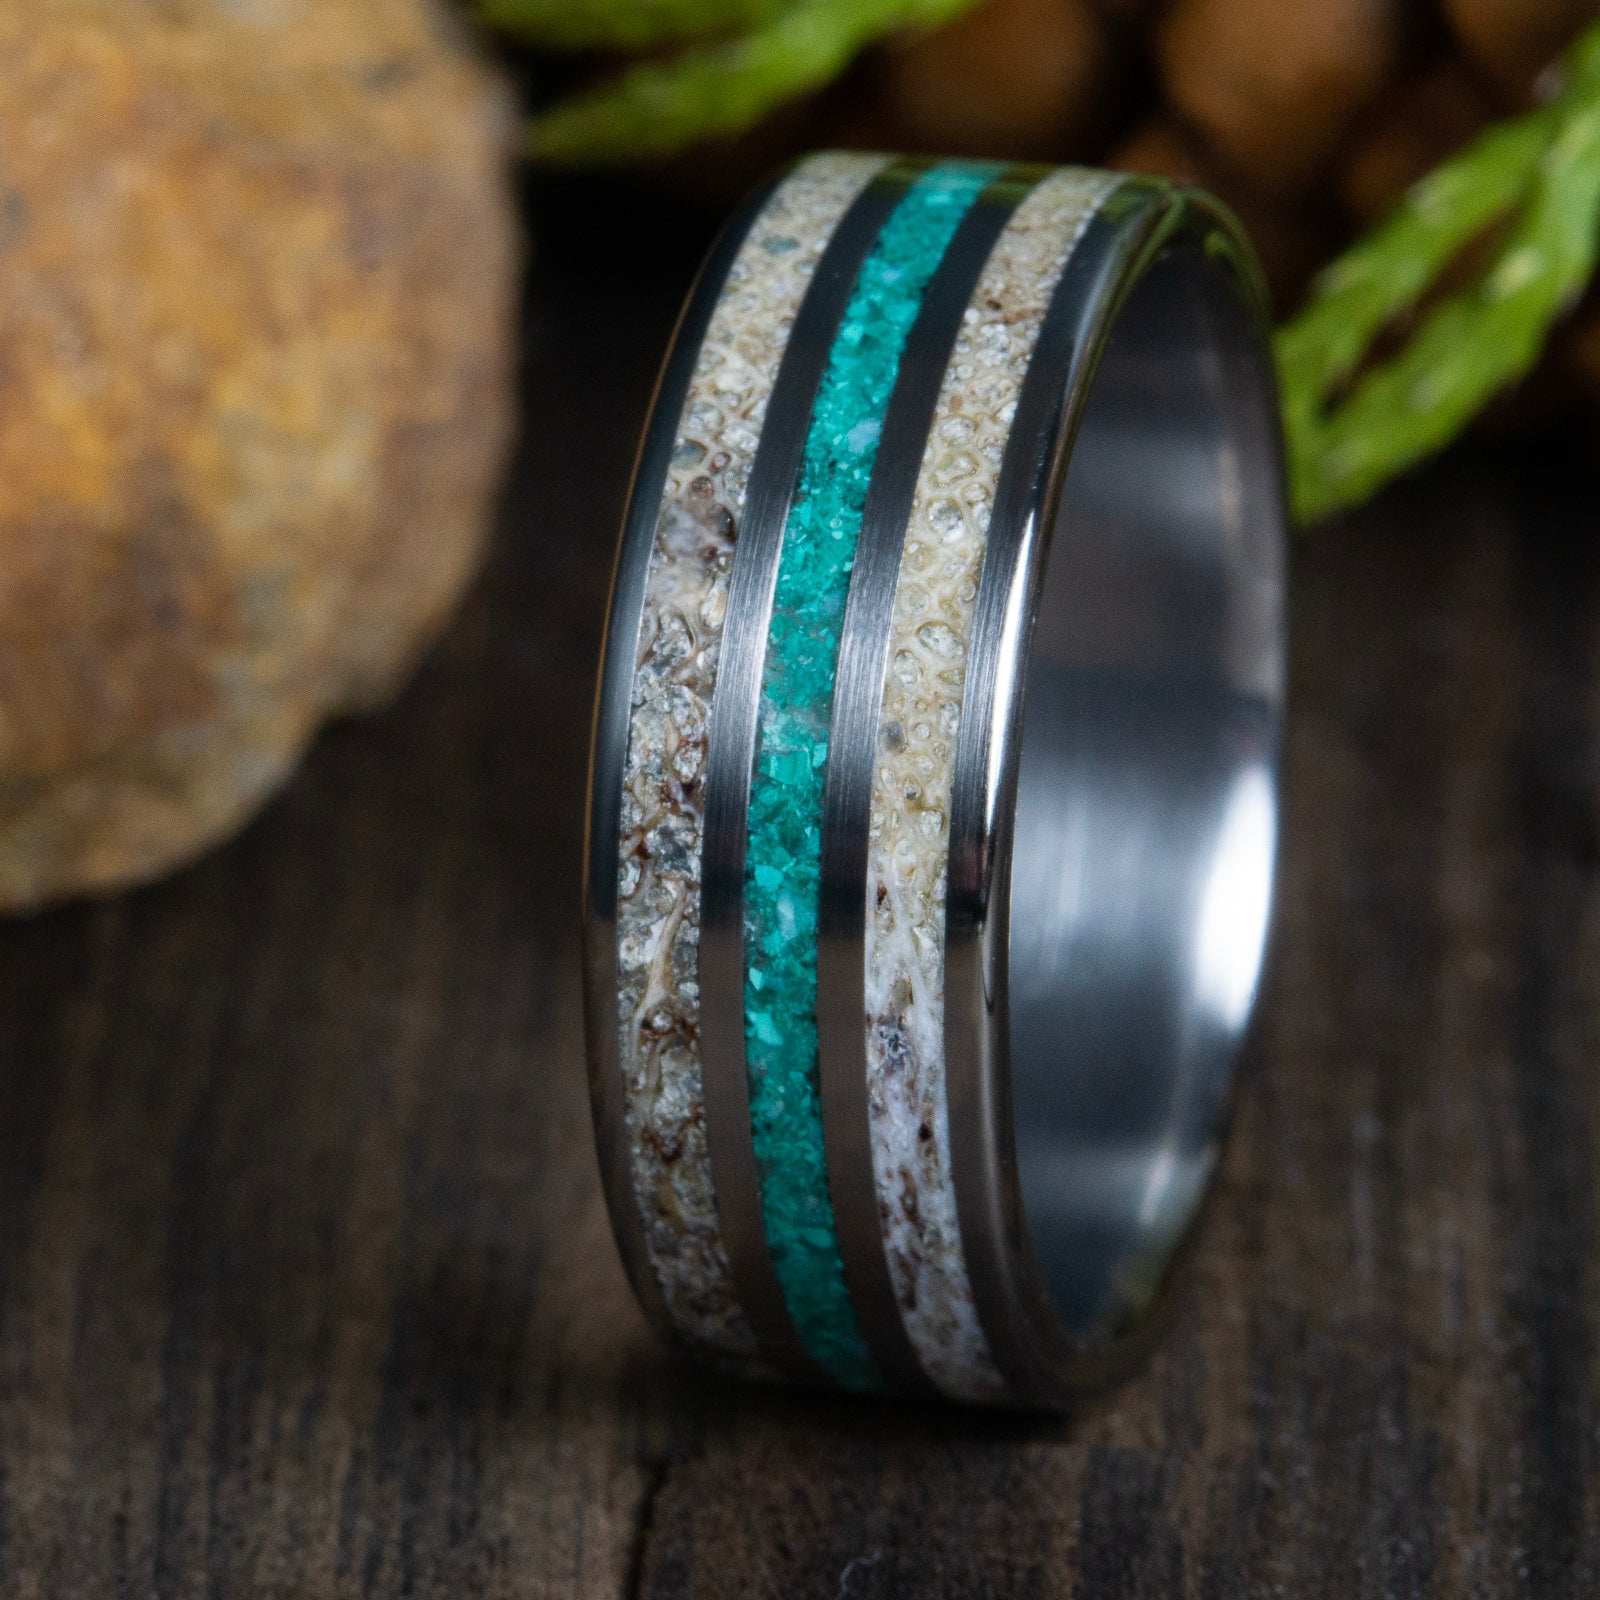 Antler ring with malachite